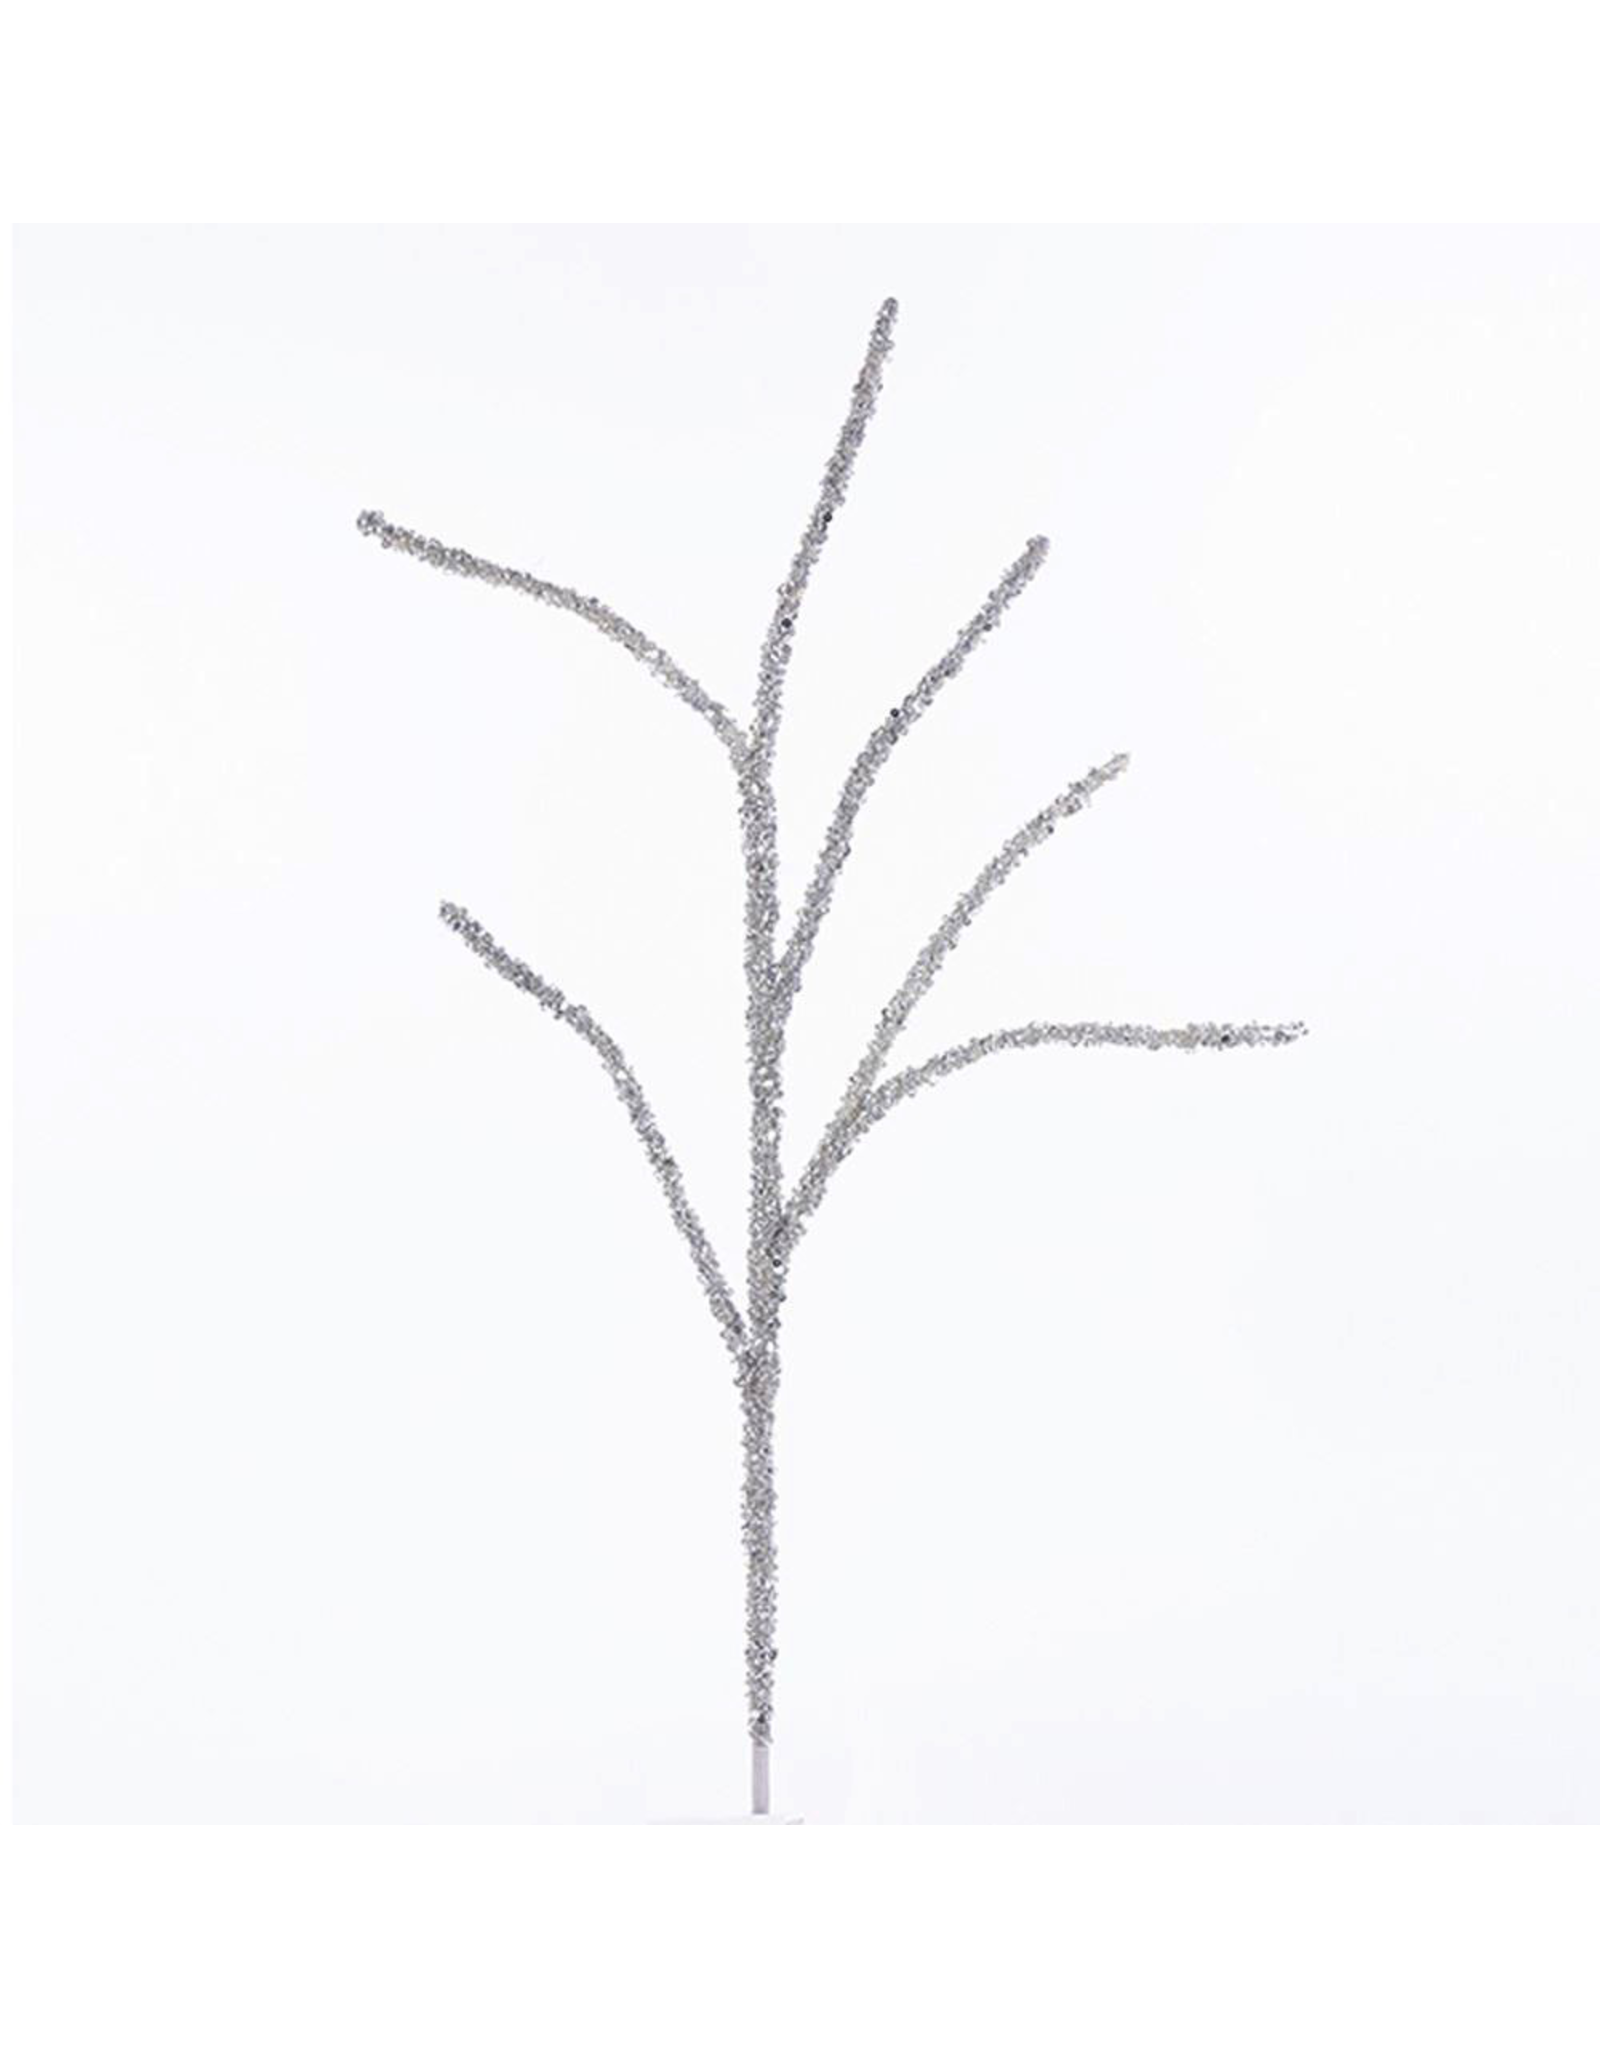 Kurt Adler Silver Twig Glittered Branch 32in C0395 Christmas Floral